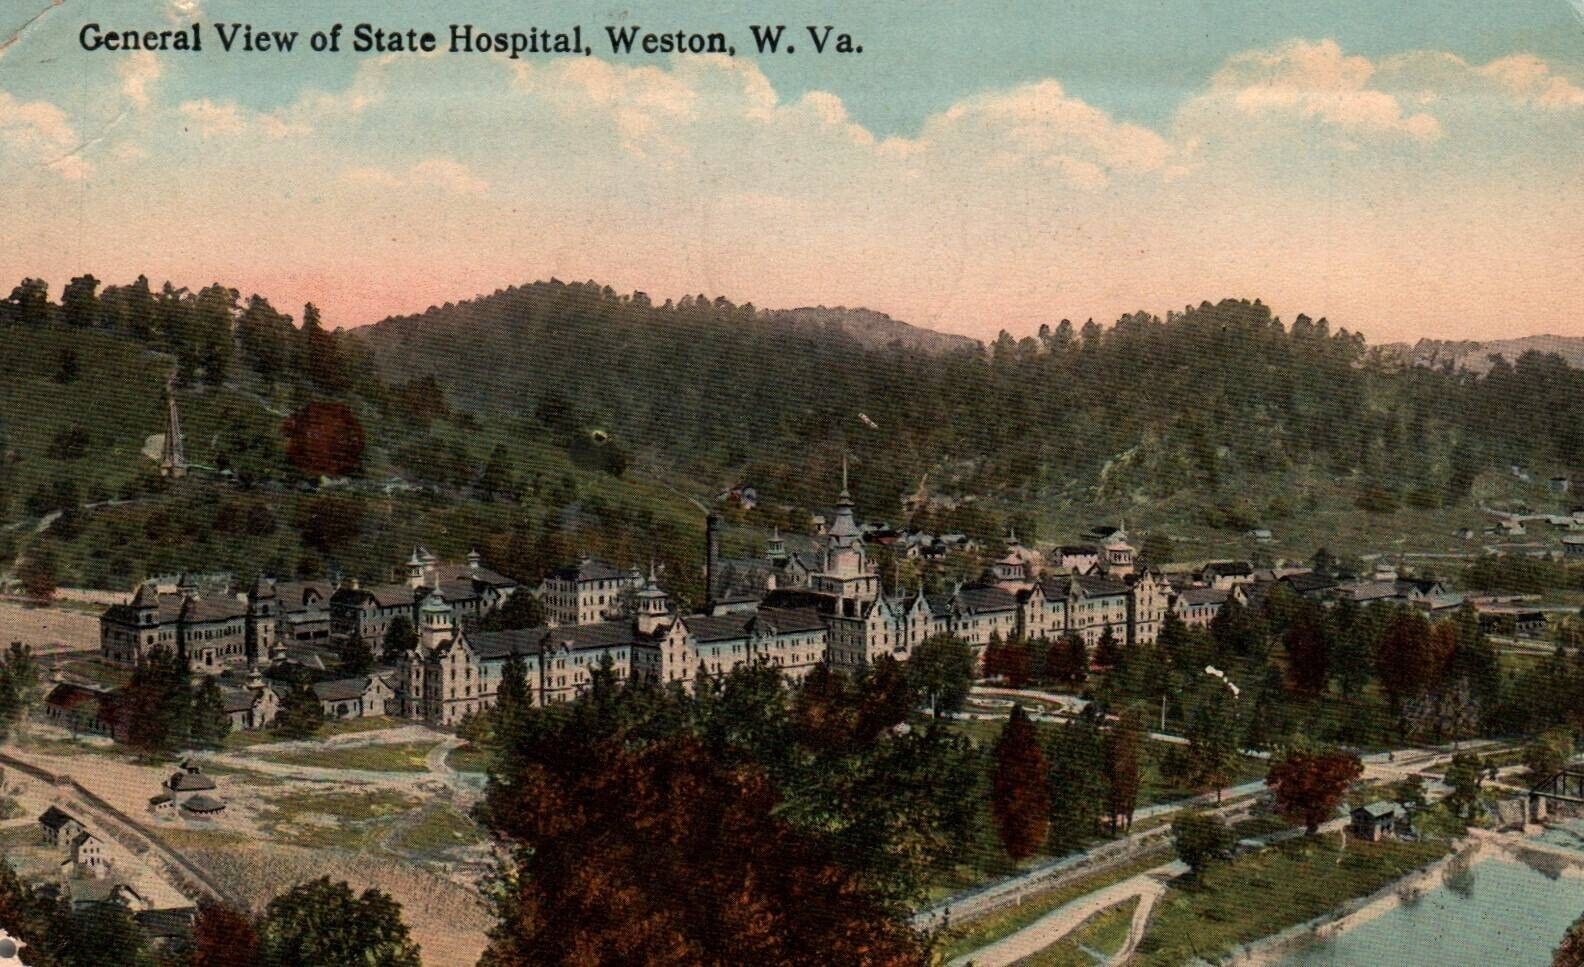 Weston W. Va. General View State Hospital Vintage 1919 Postcard